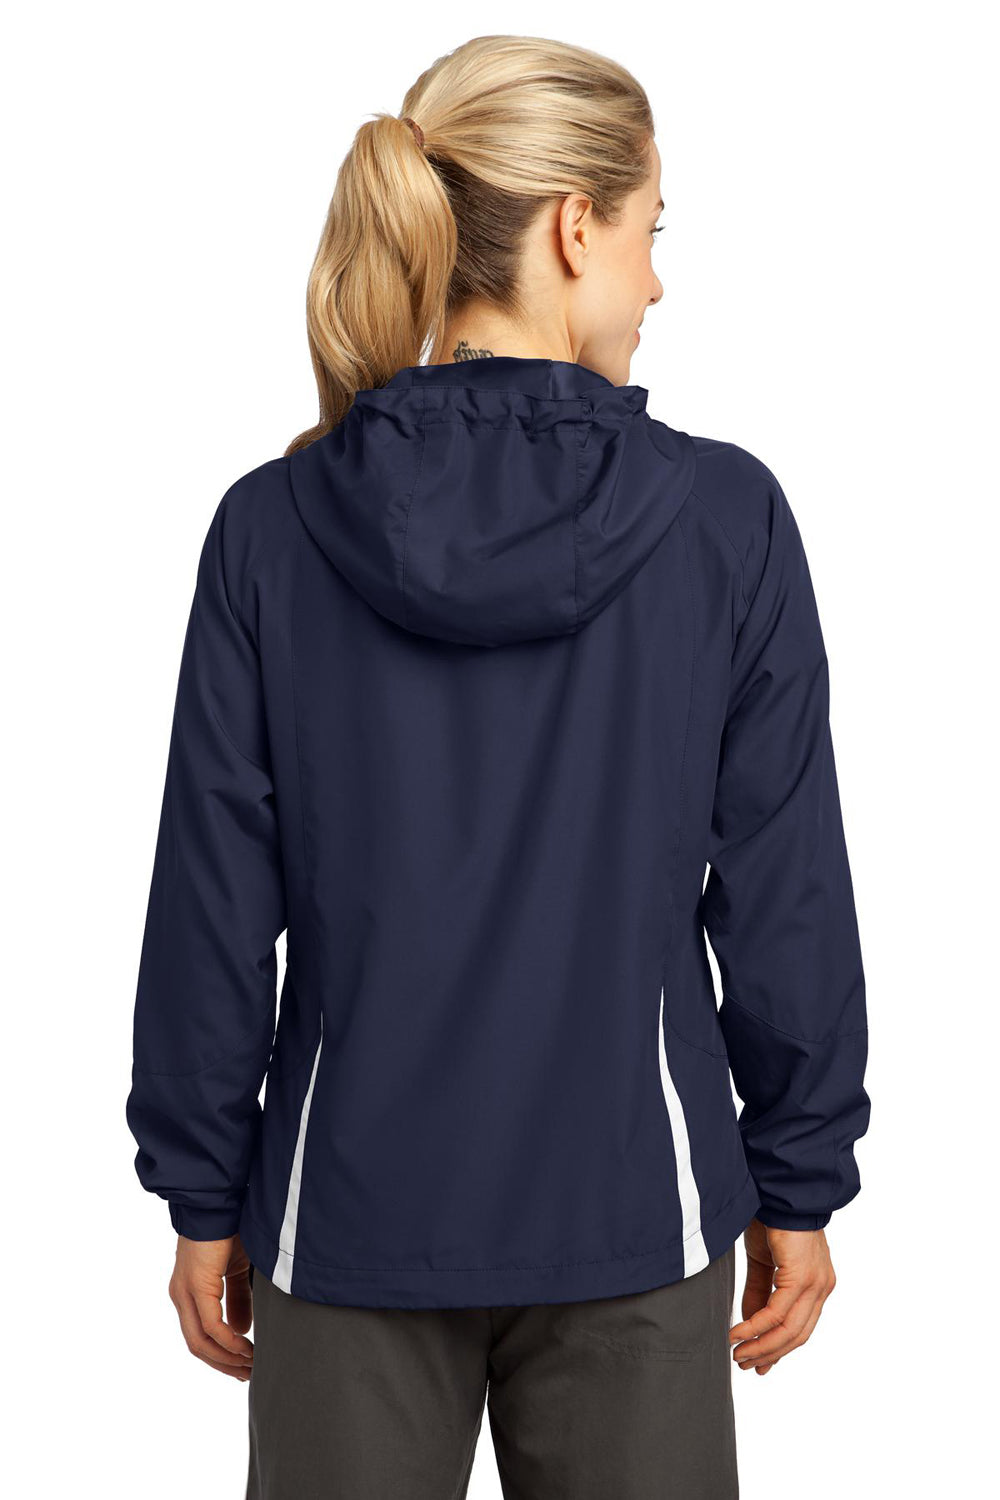 Sport-Tek LST76 Womens Water Resistant Full Zip Hooded Jacket Navy Blue Back